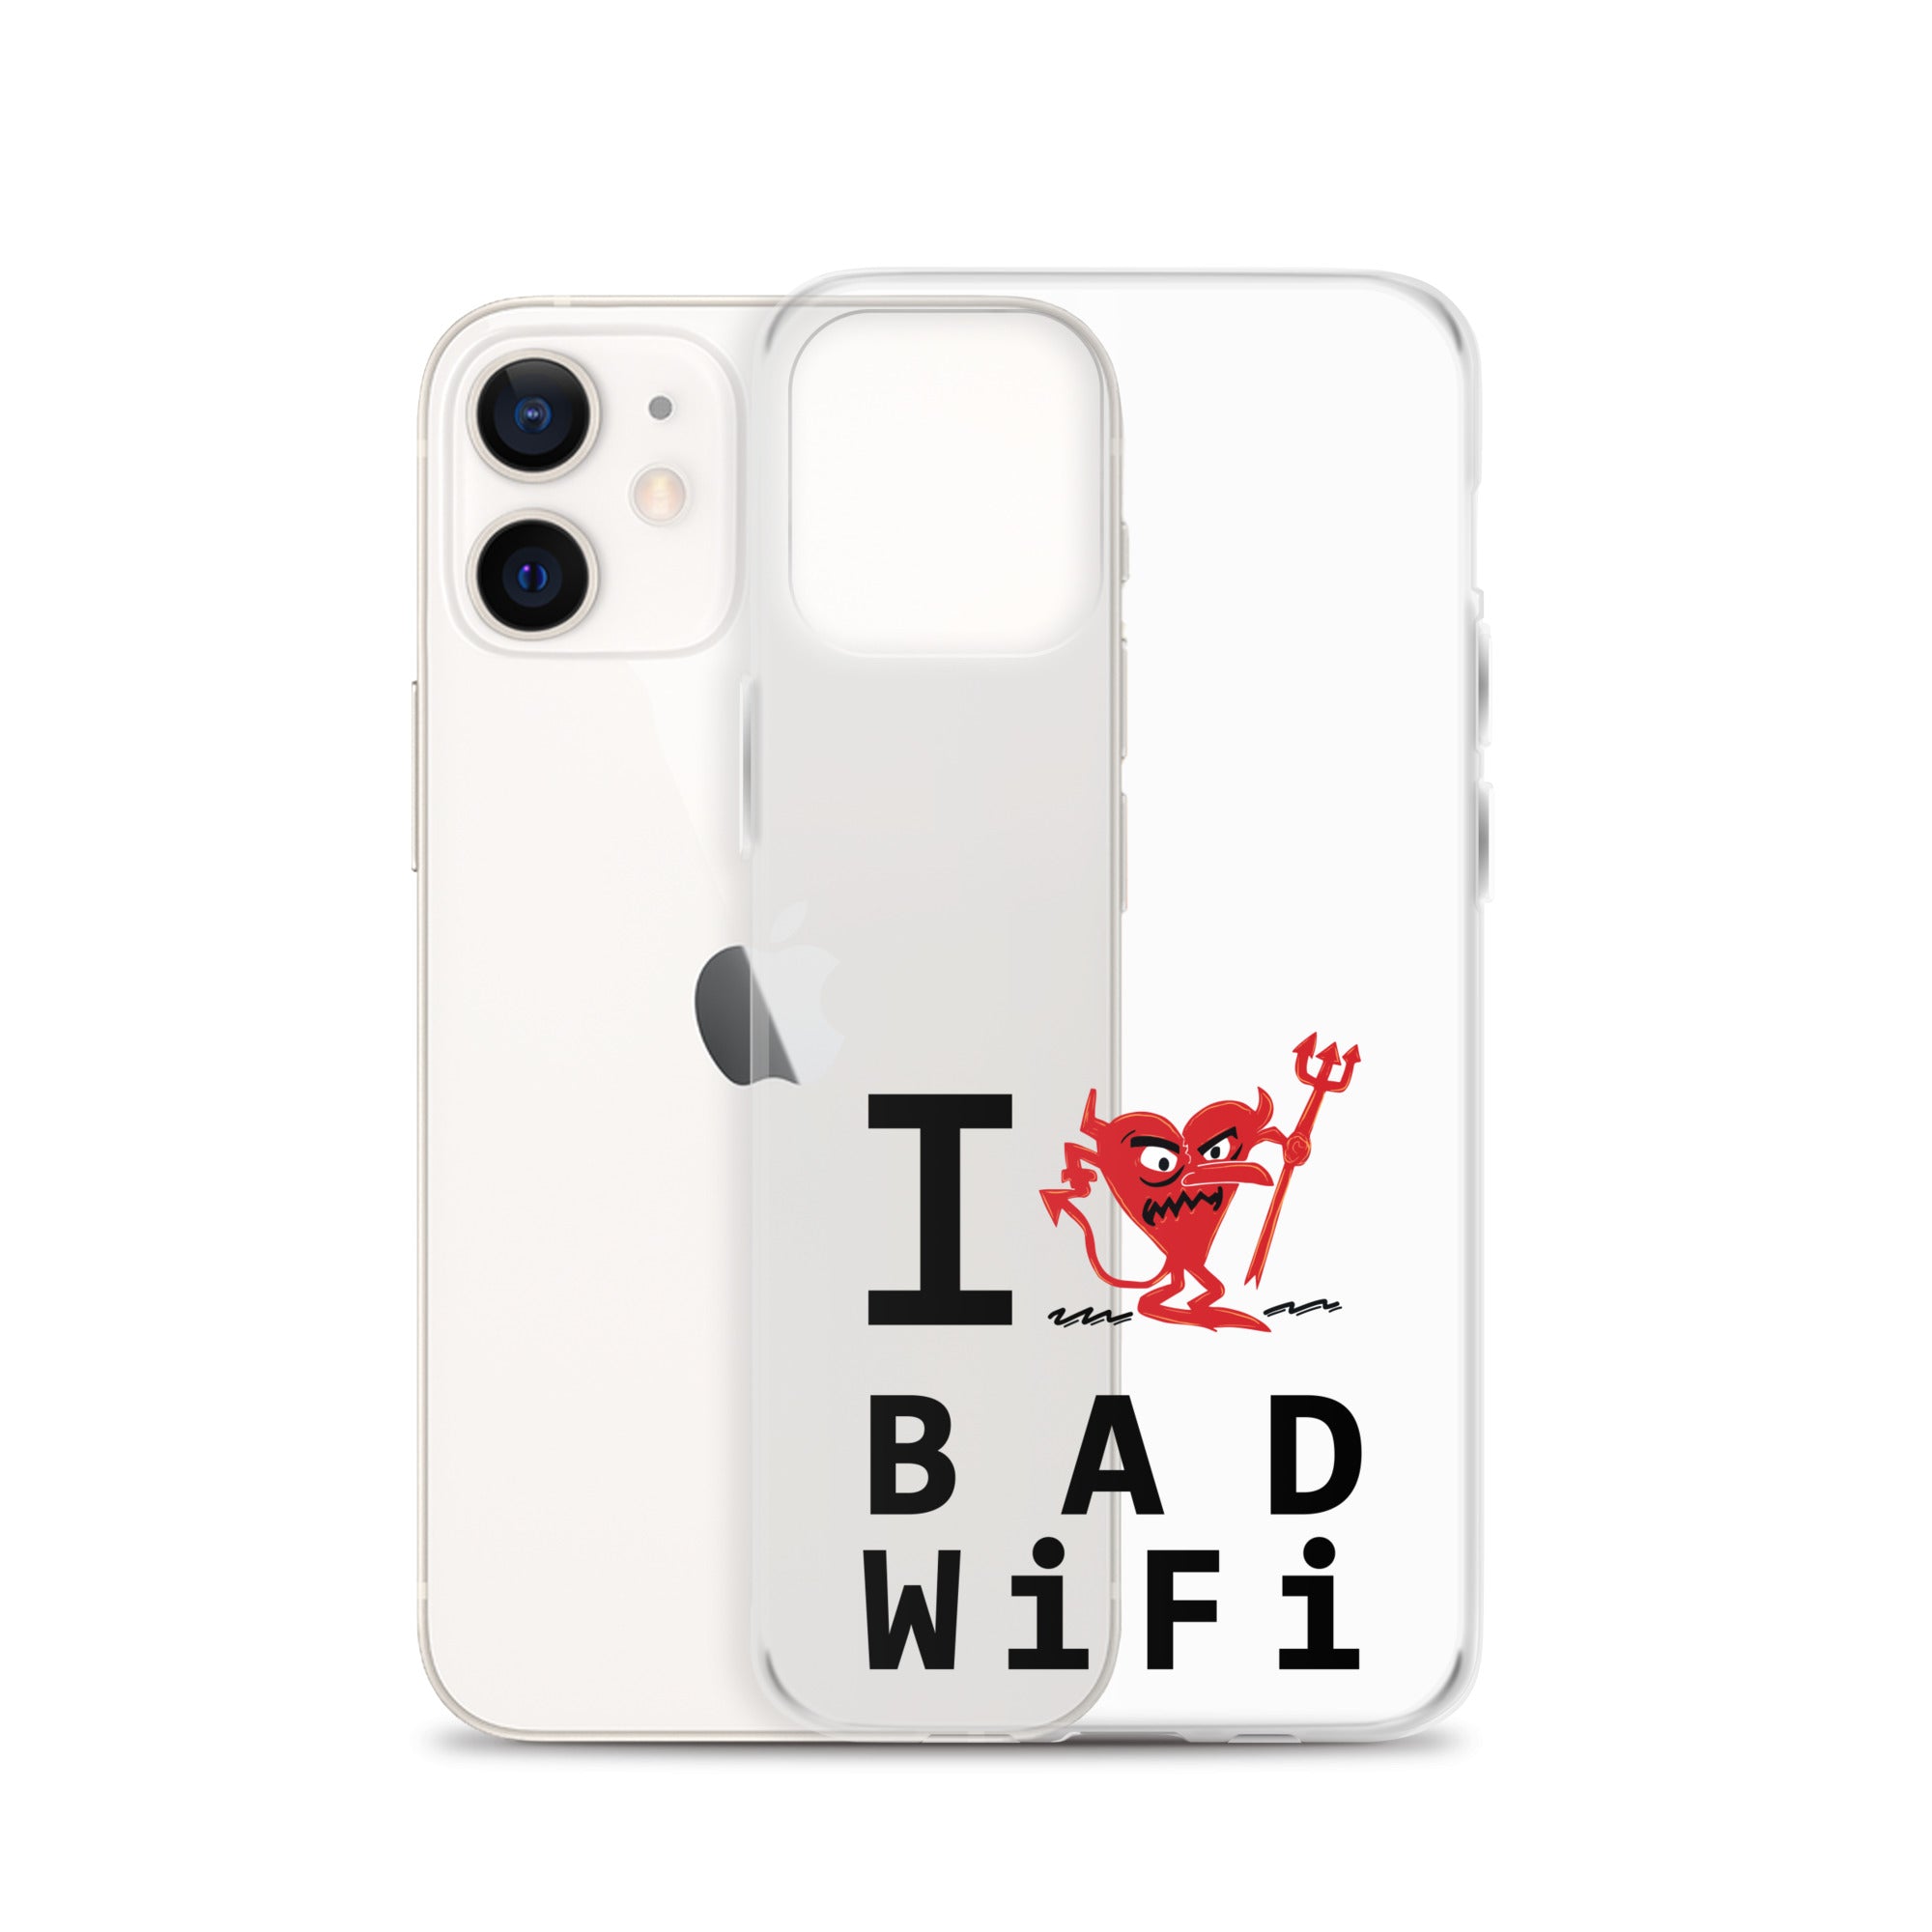 BAD WIFI iPhone Case